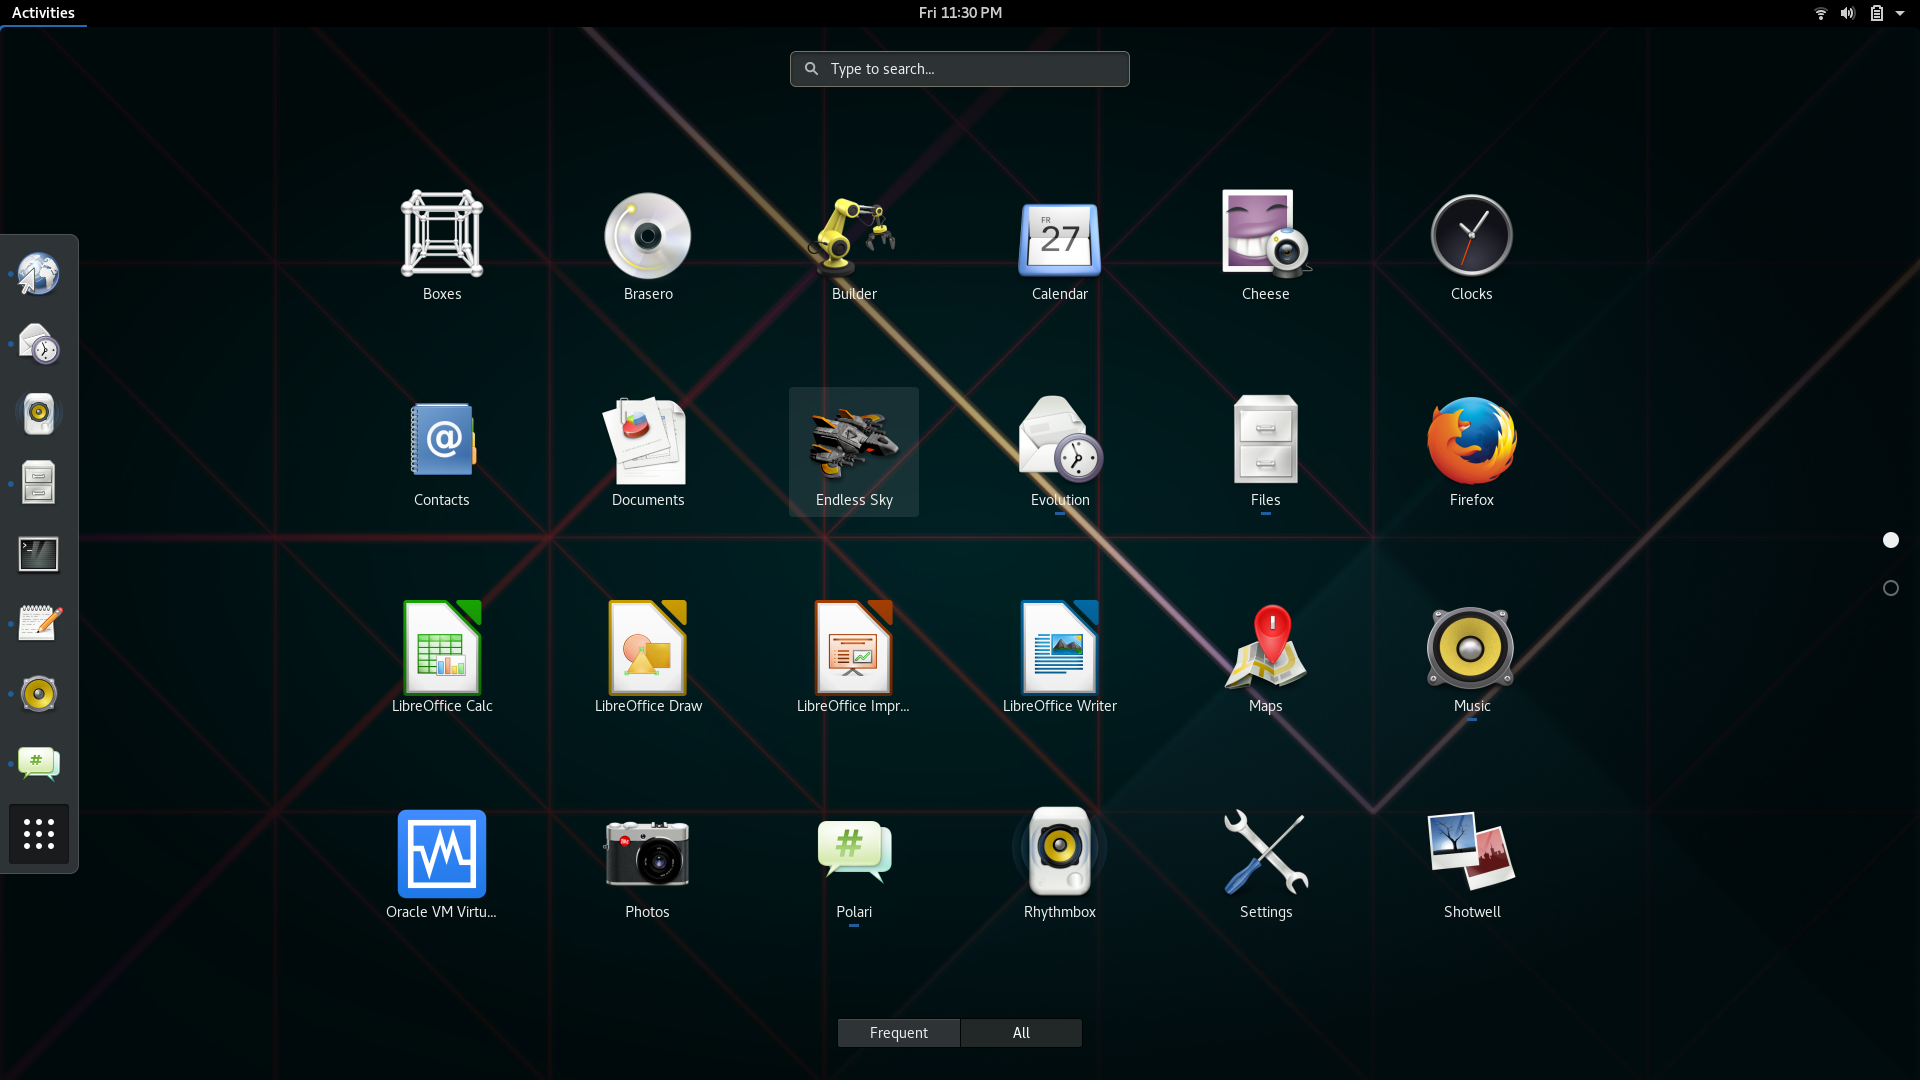 Endless Sky as a desktop app in Fedora GNOME